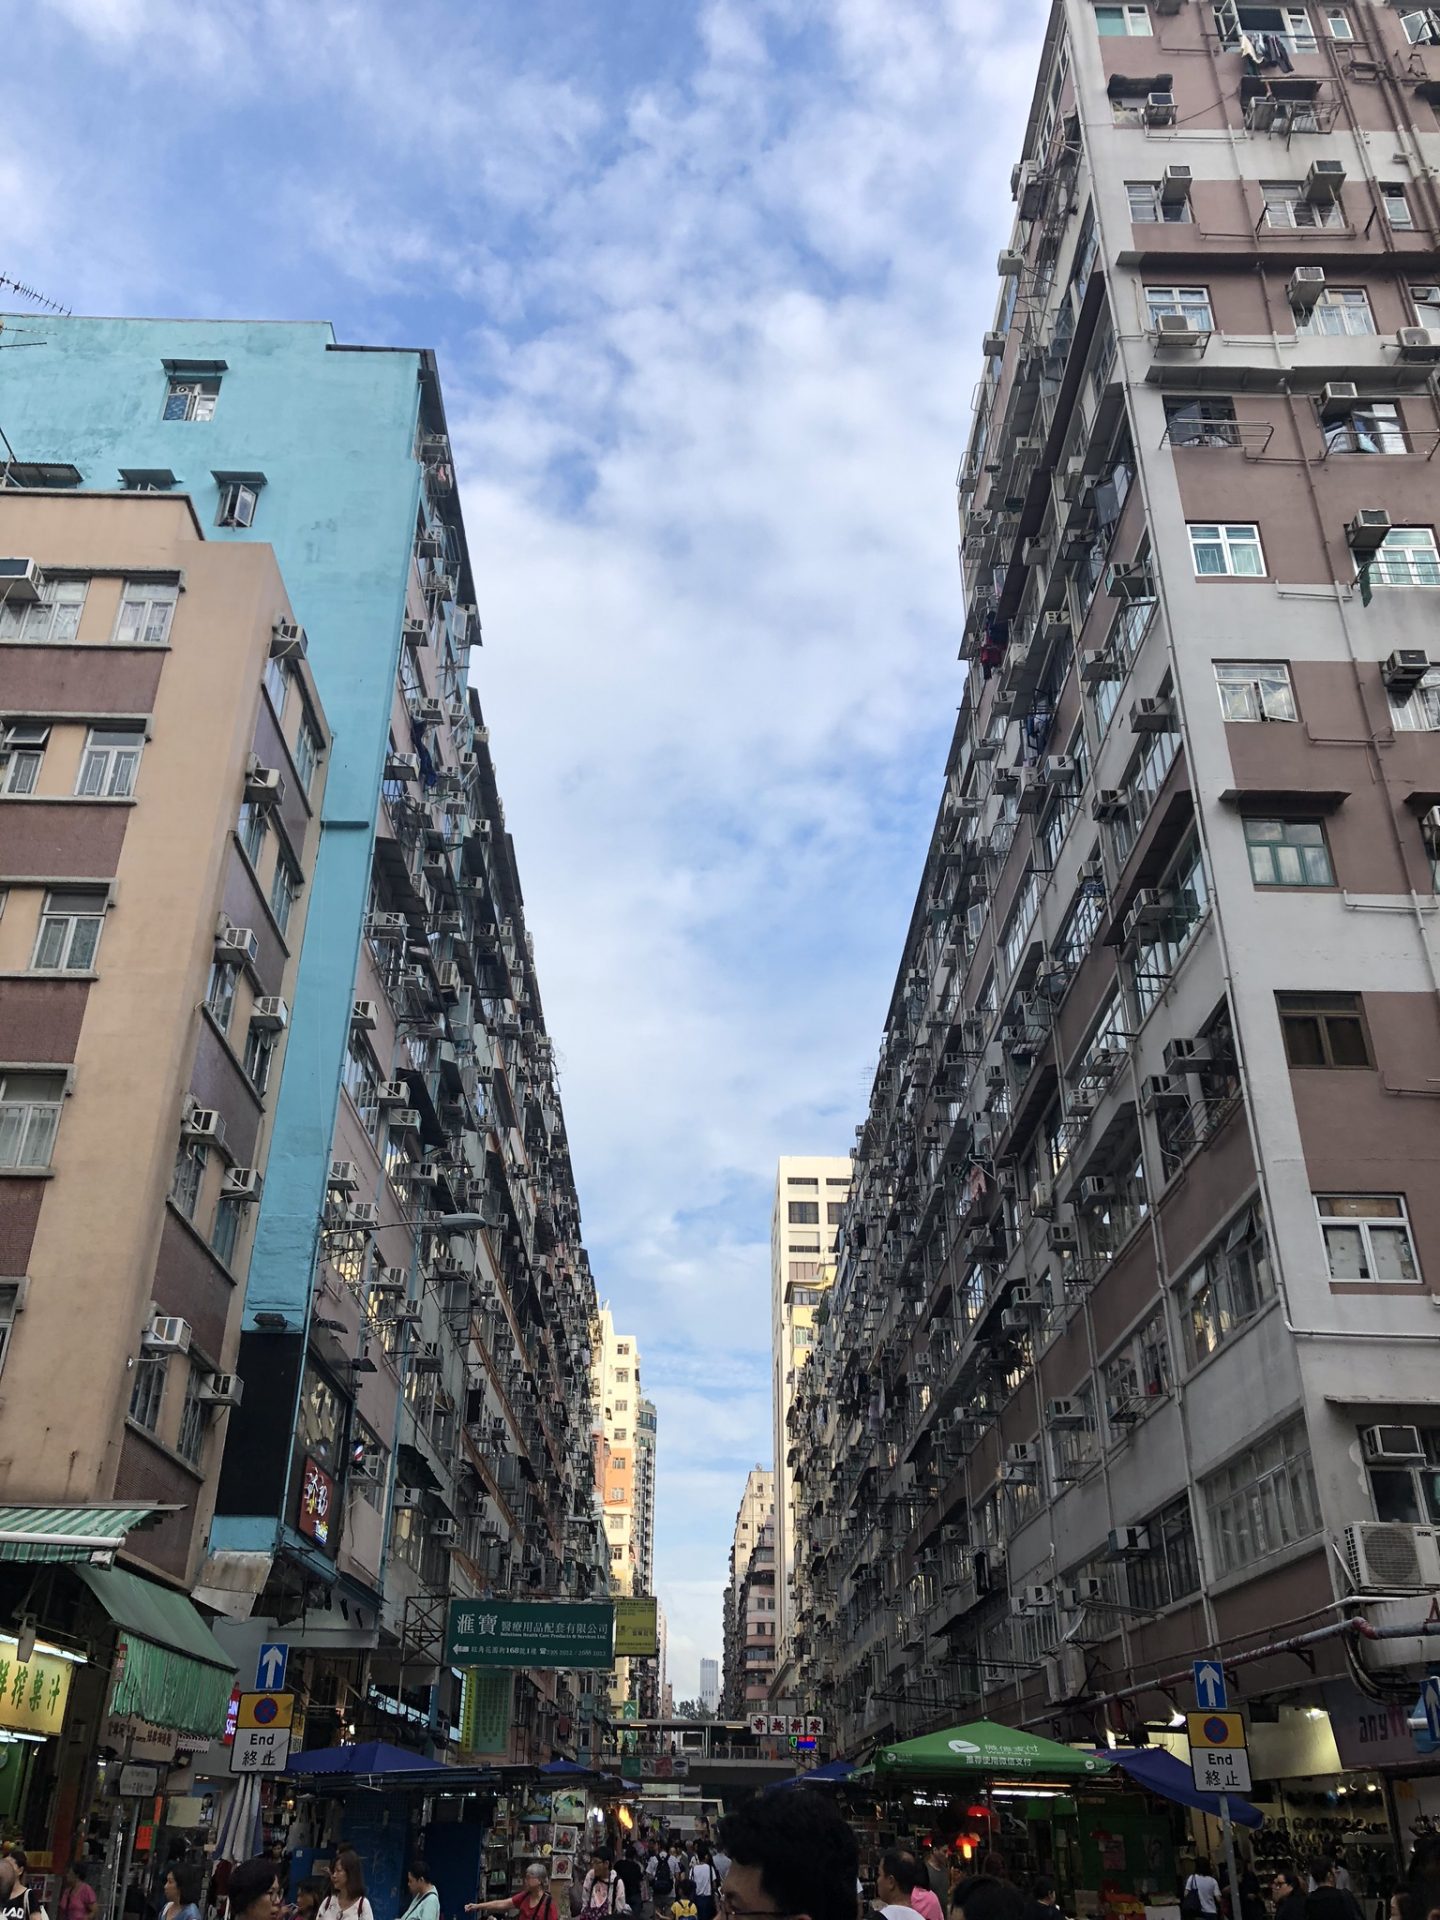 Streets of Mong Kok, Hong Kong